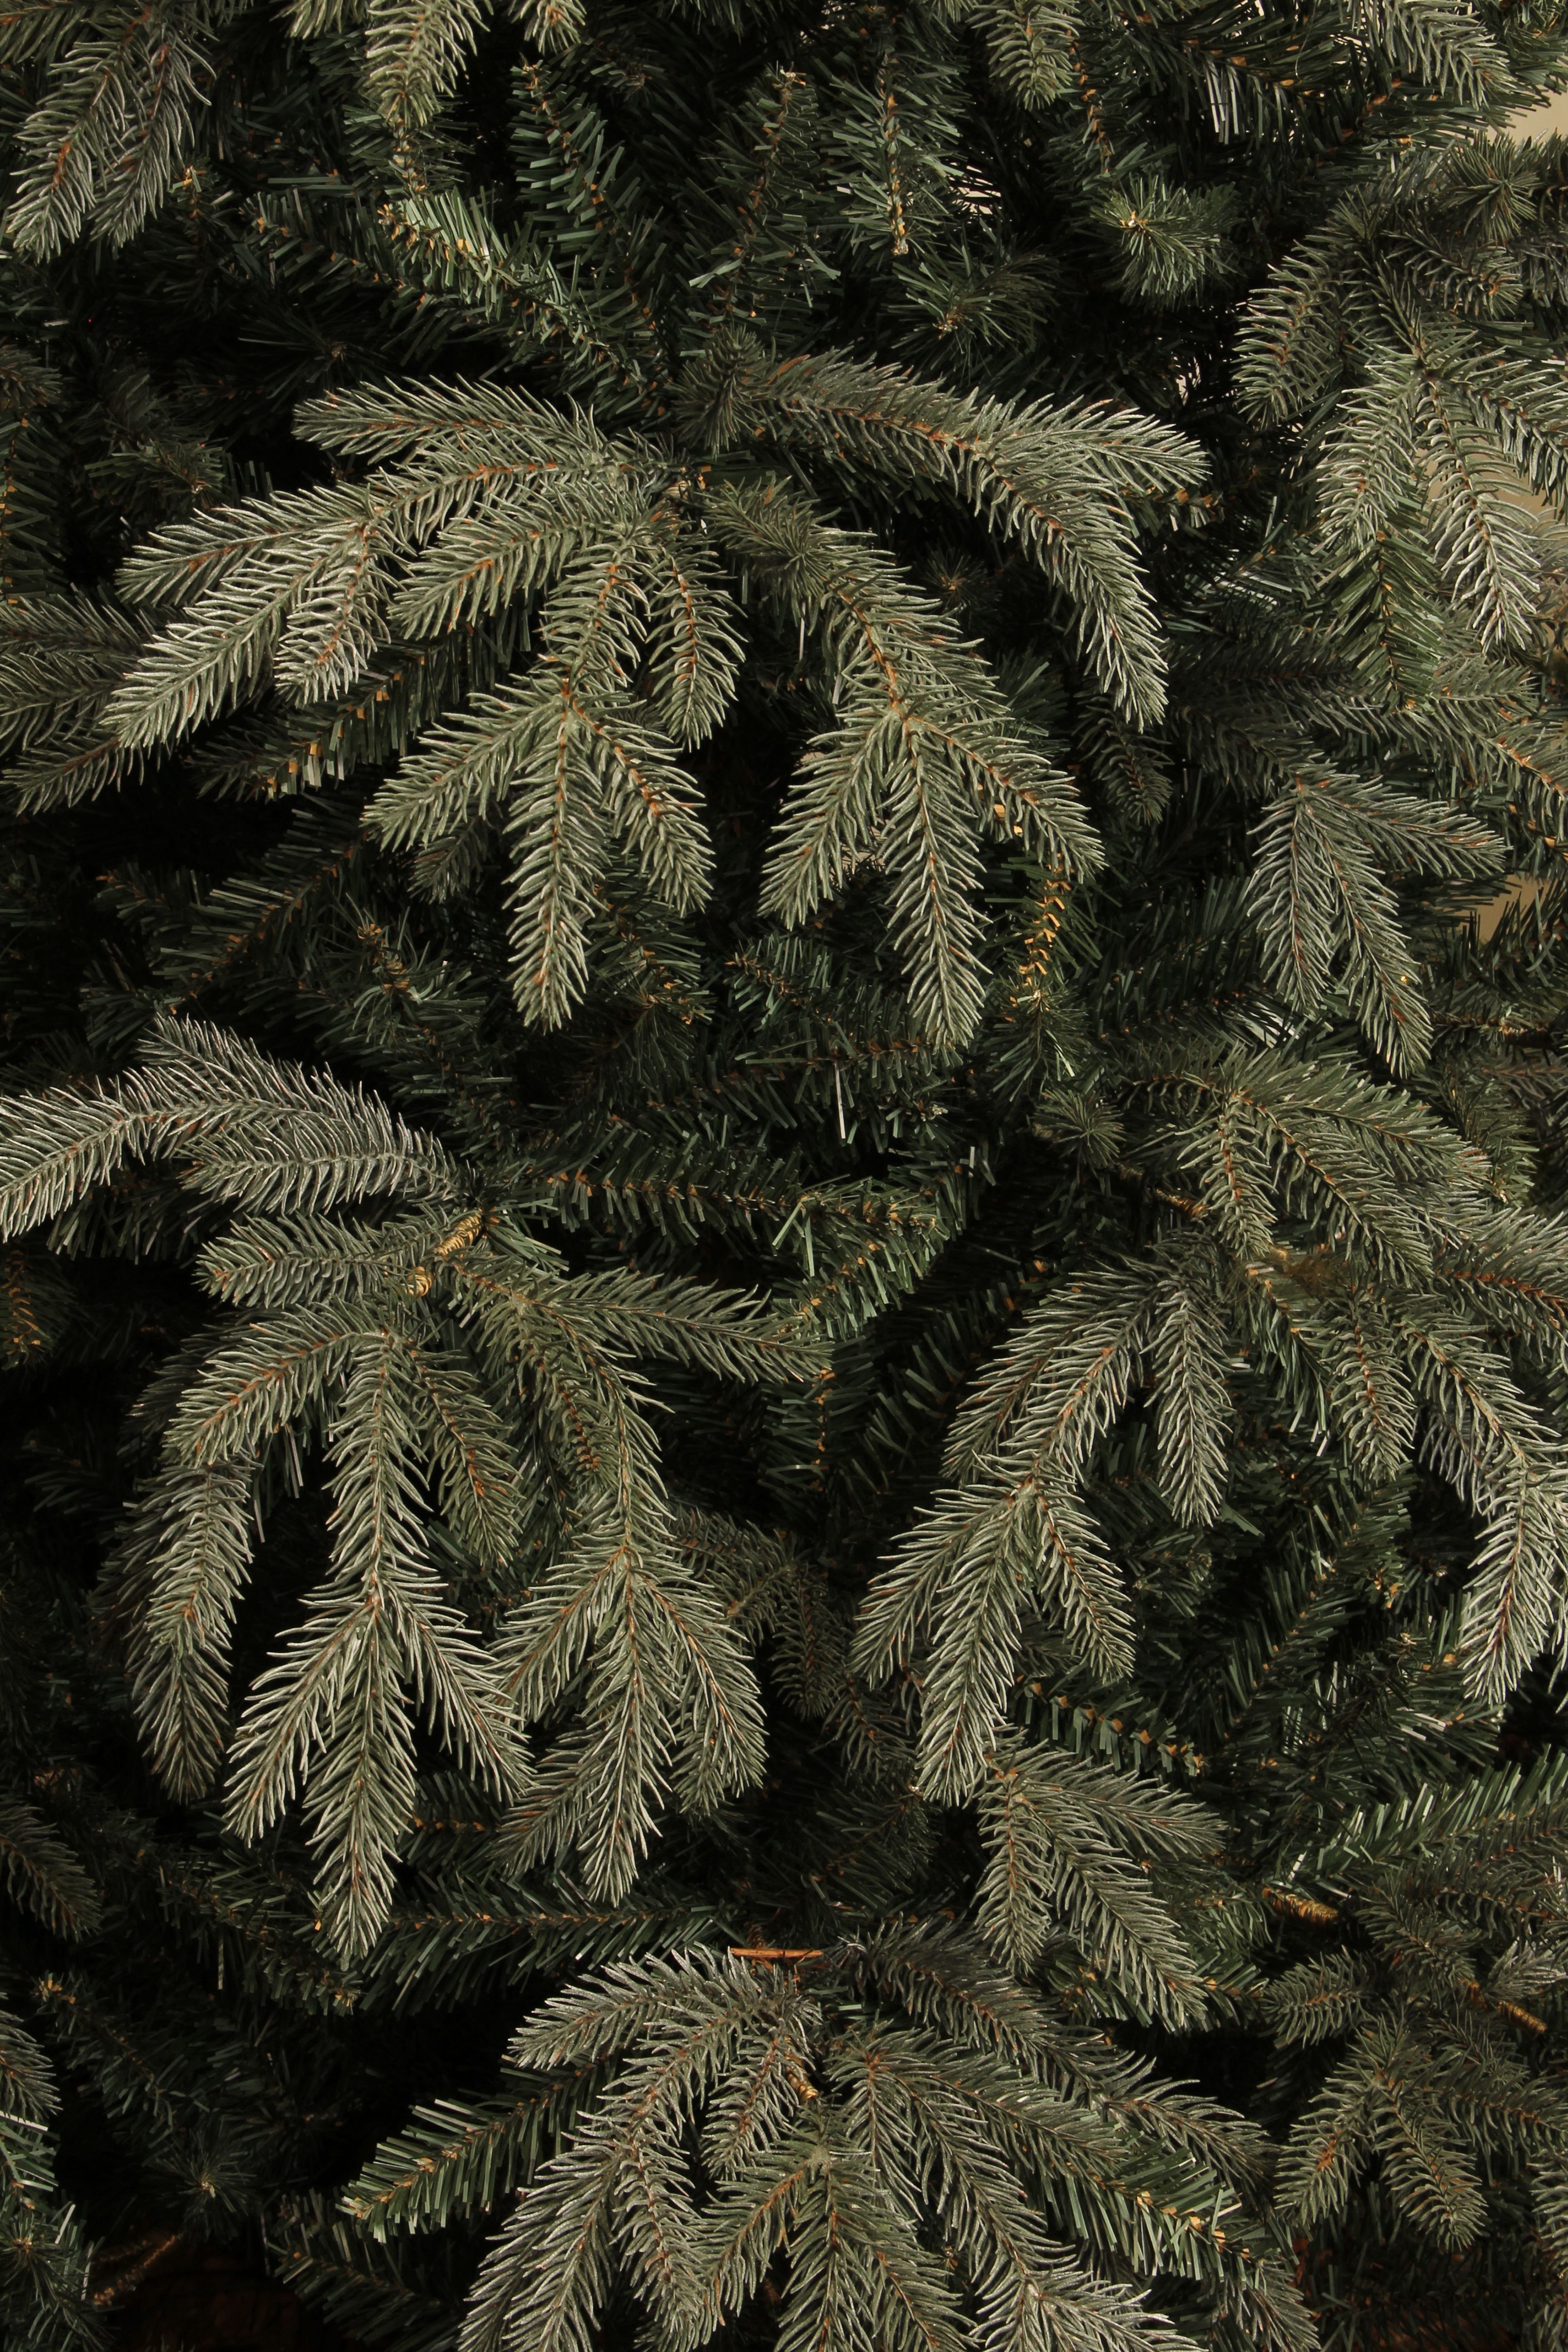 Weihnachtsbaum Maclura h185 cm Black Box Trees